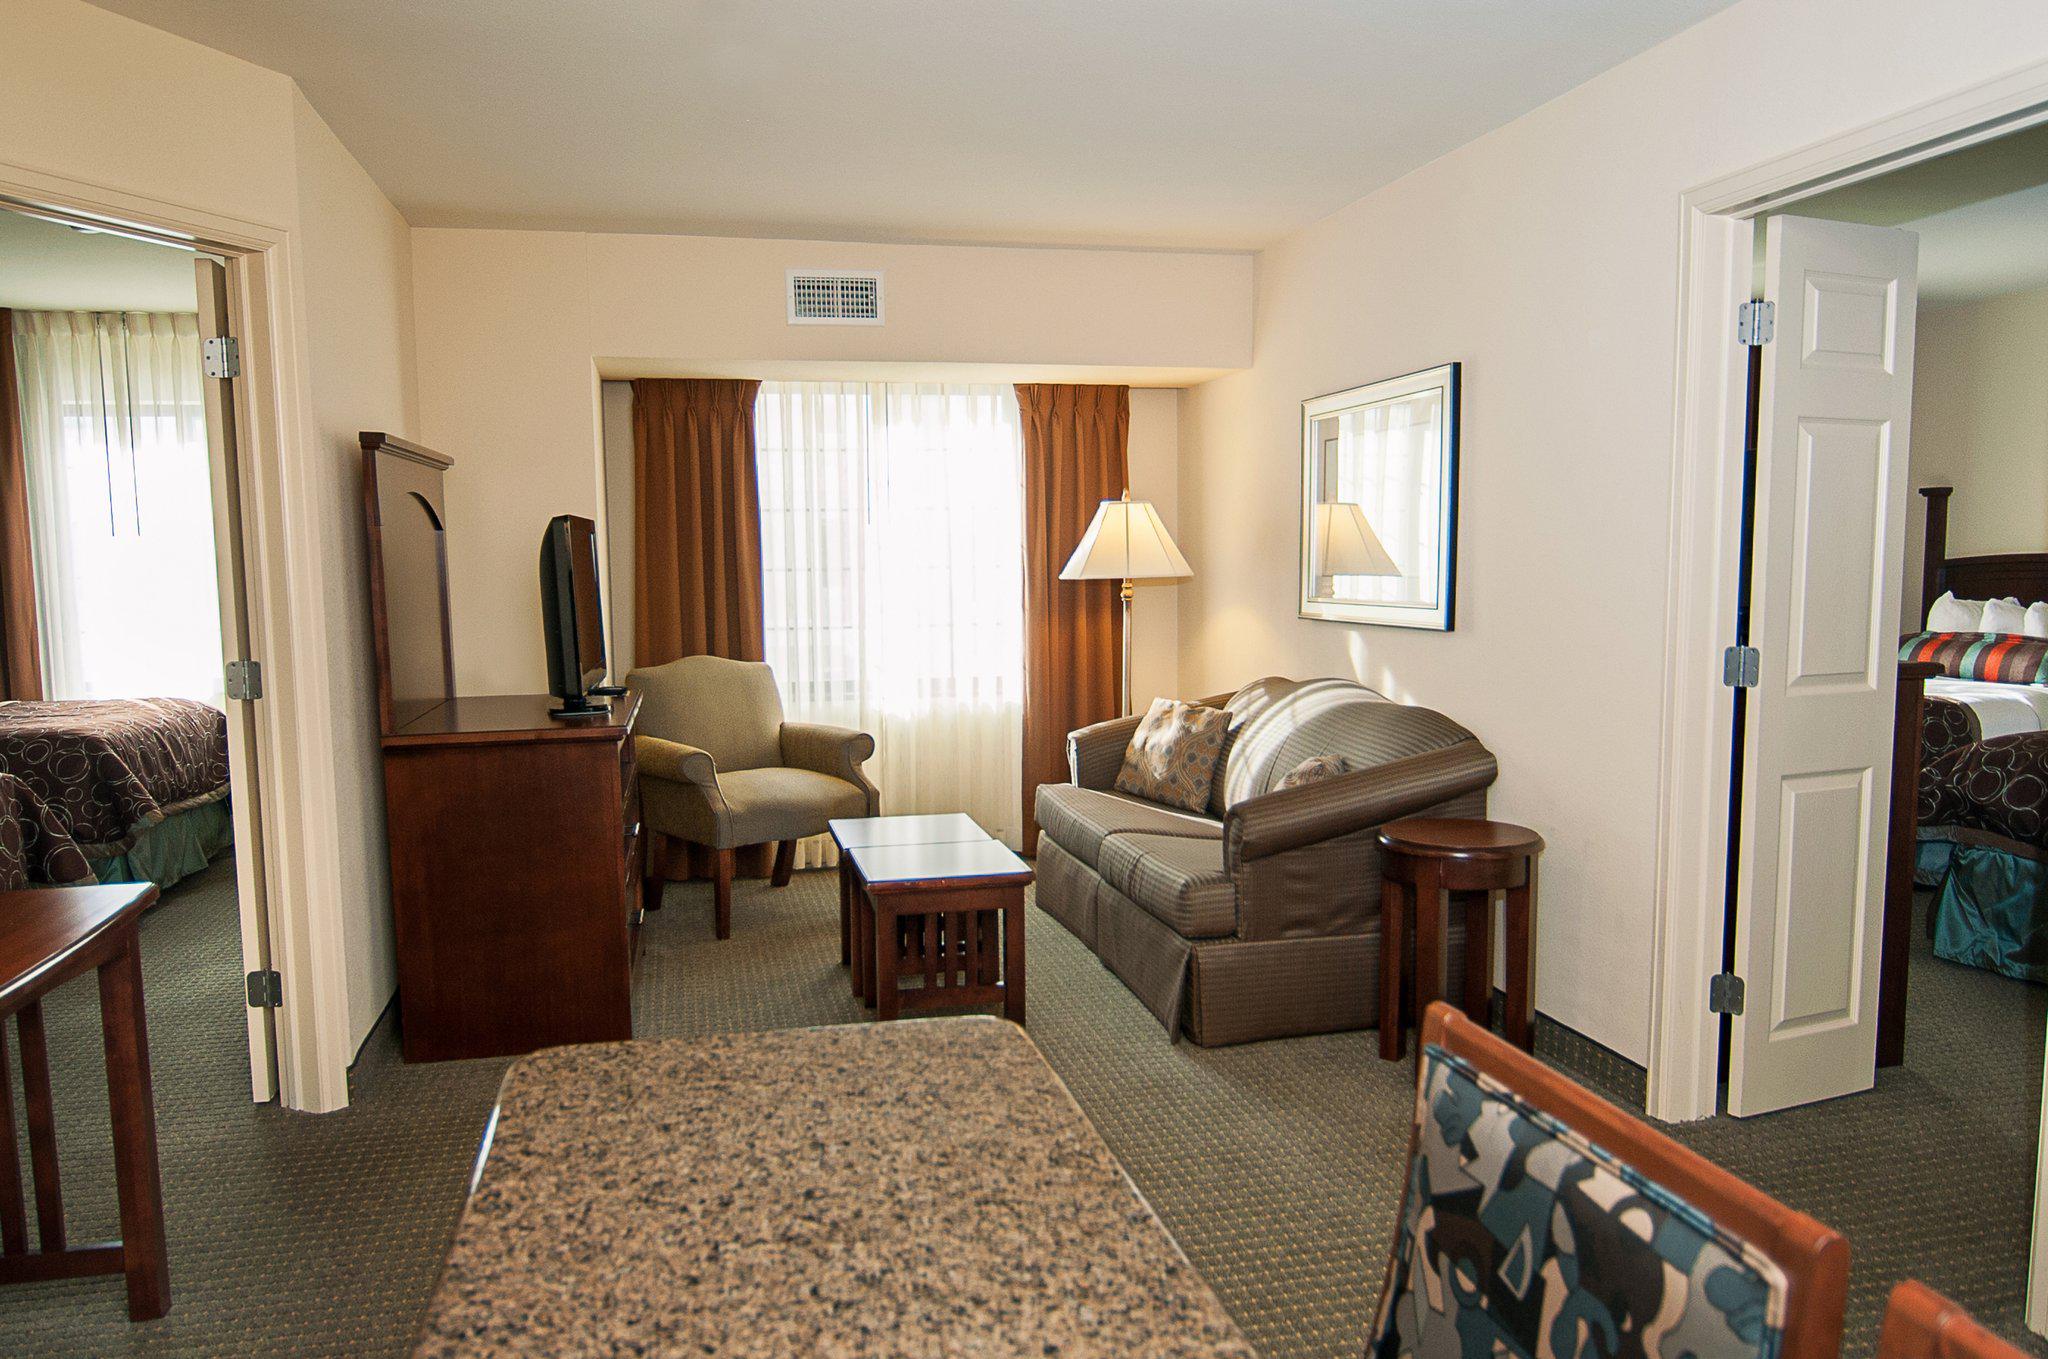 Staybridge Suites Wichita Photo